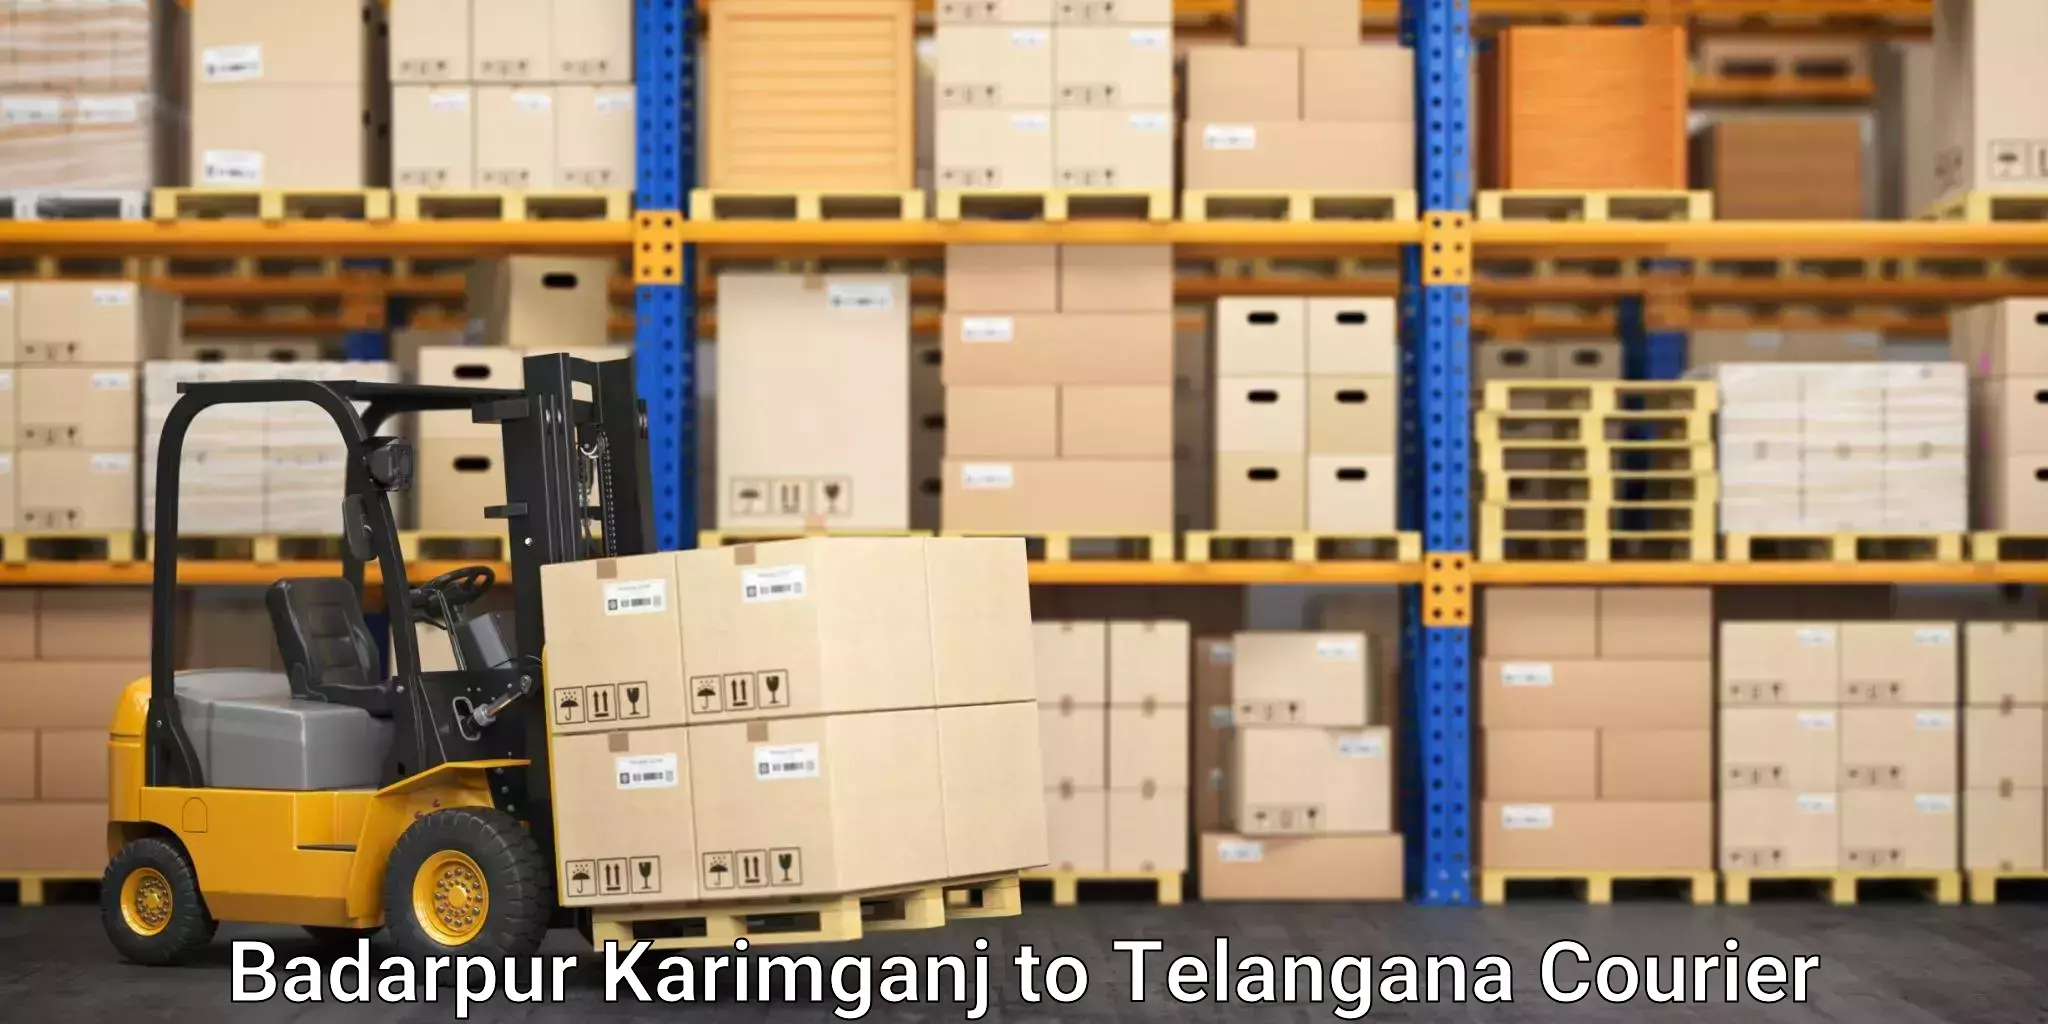 Cash on delivery service Badarpur Karimganj to Kamalapur